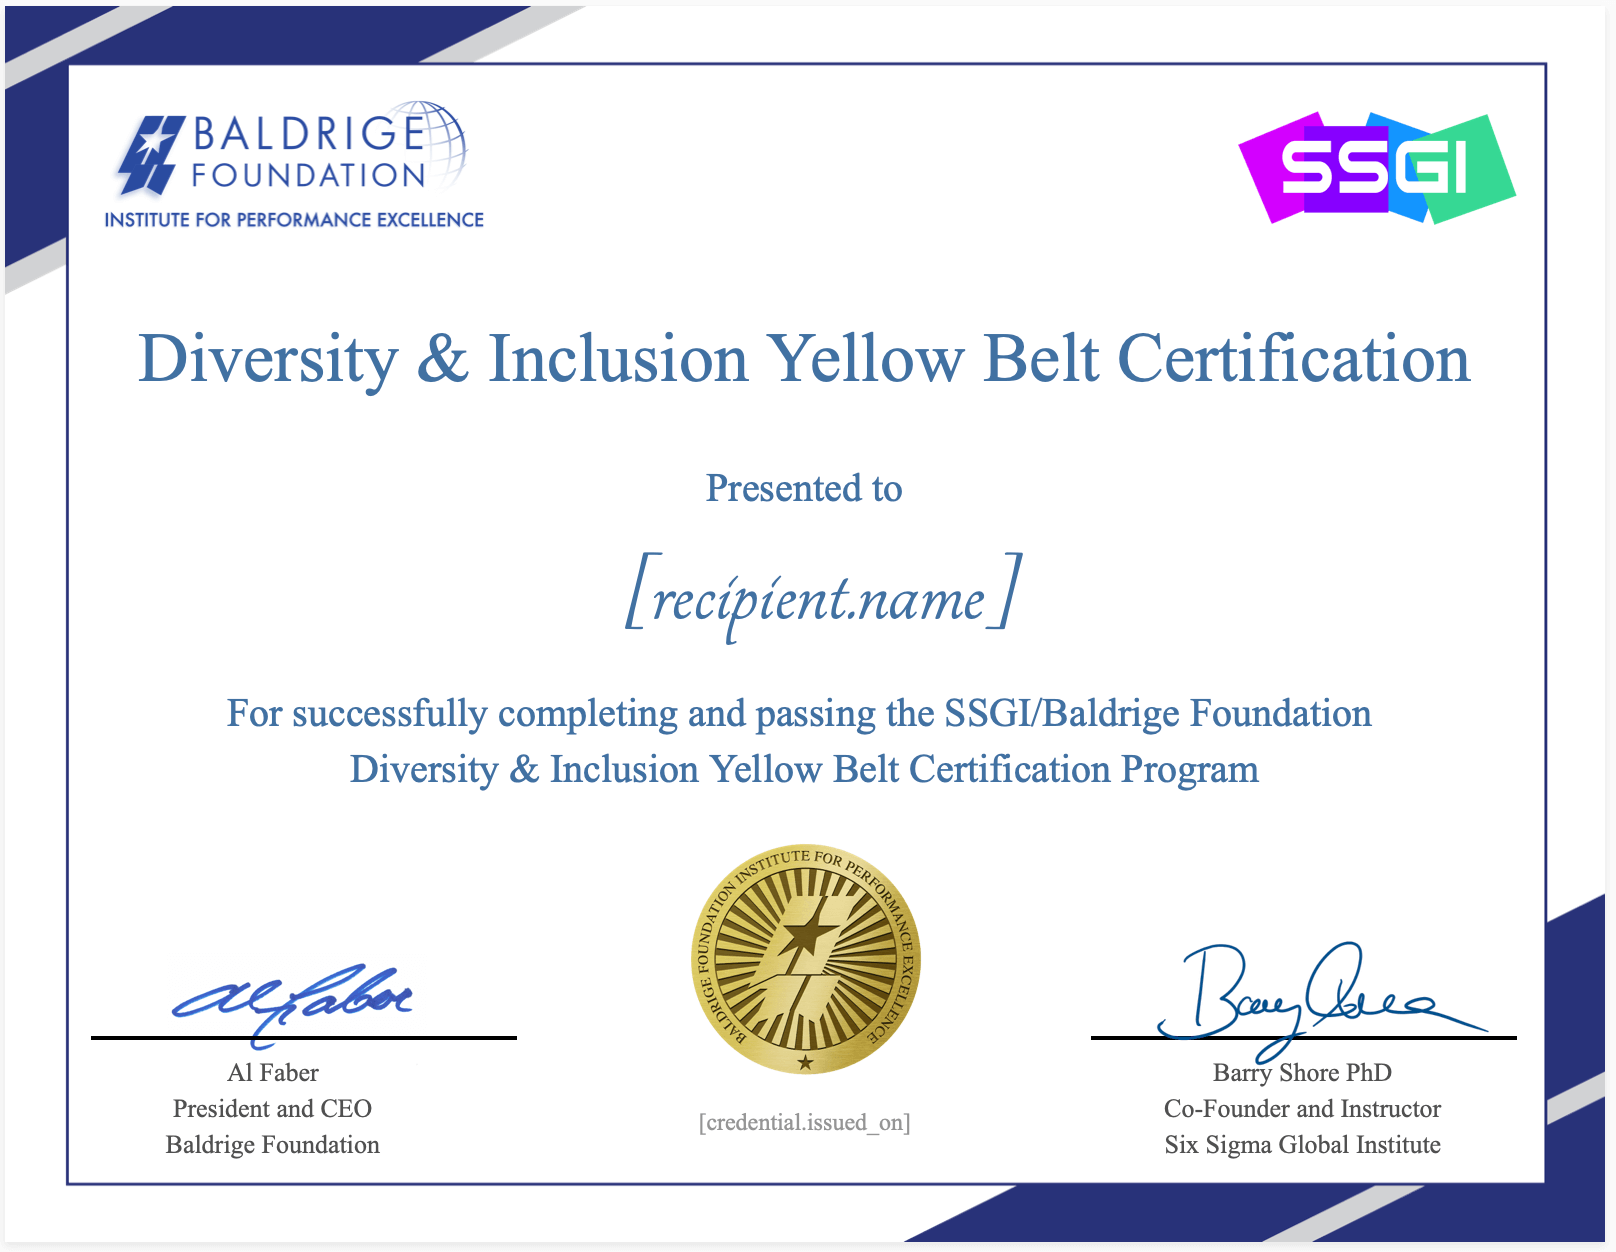 ssgi baldrige diversity and Inclusion certification